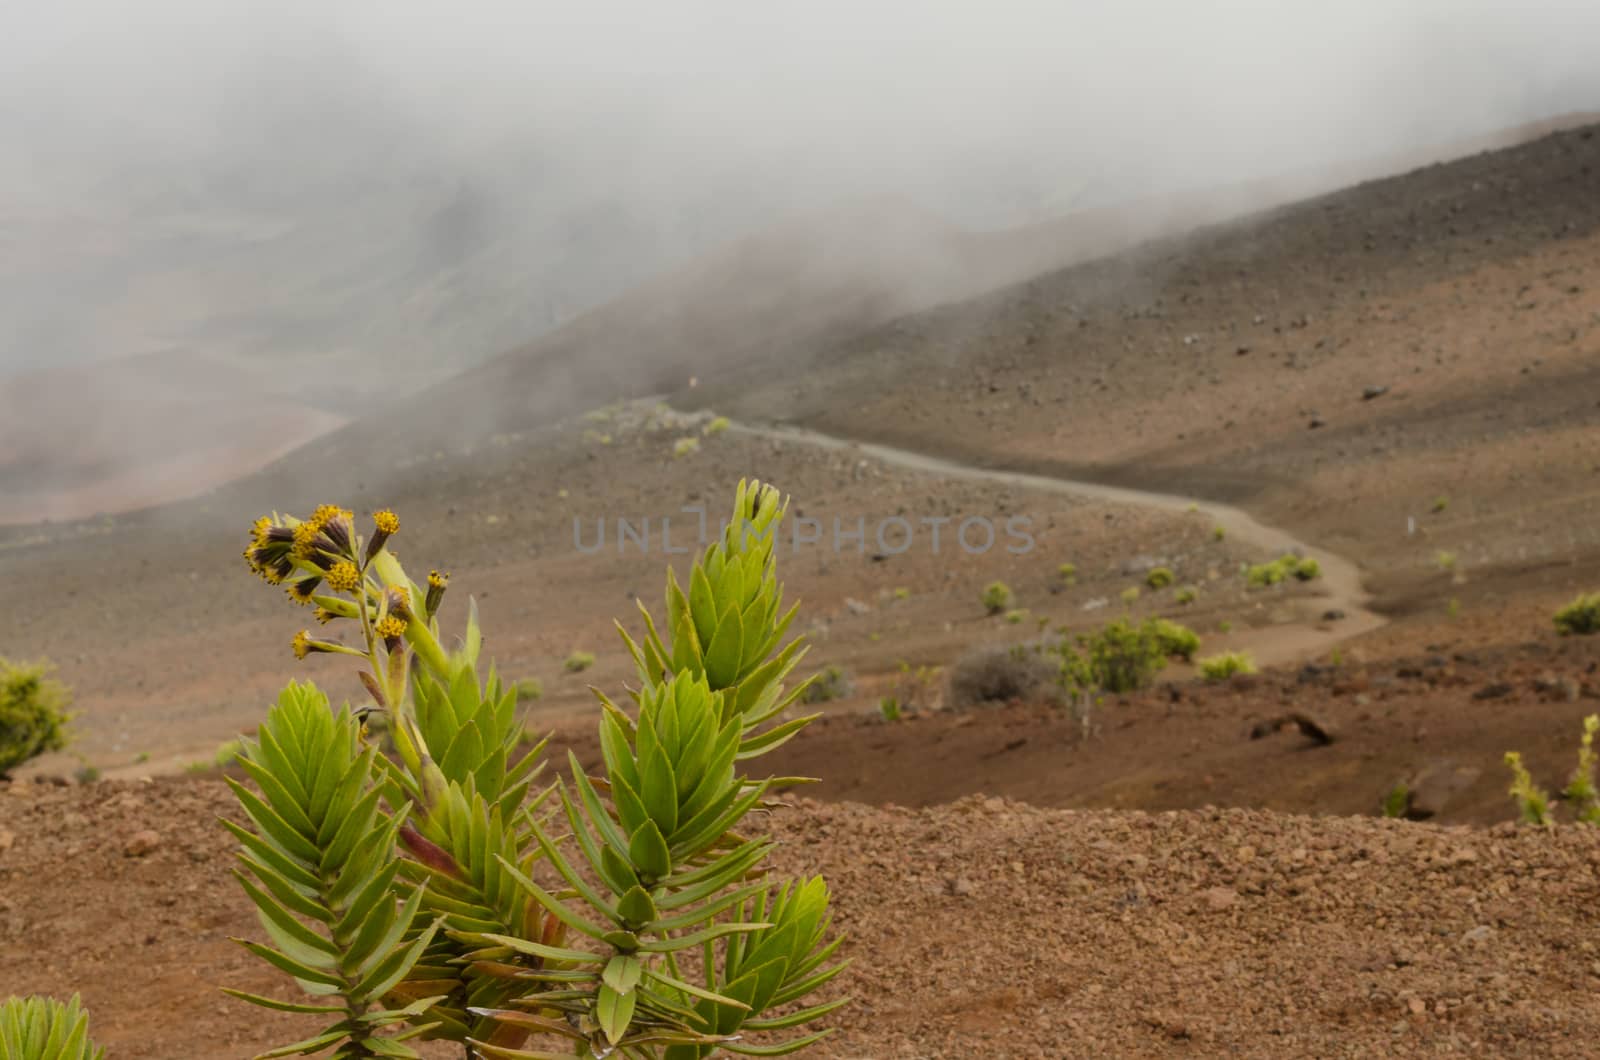 Indigenous green plant makes its way in the Haleakala national park, Maui, HAwaii.